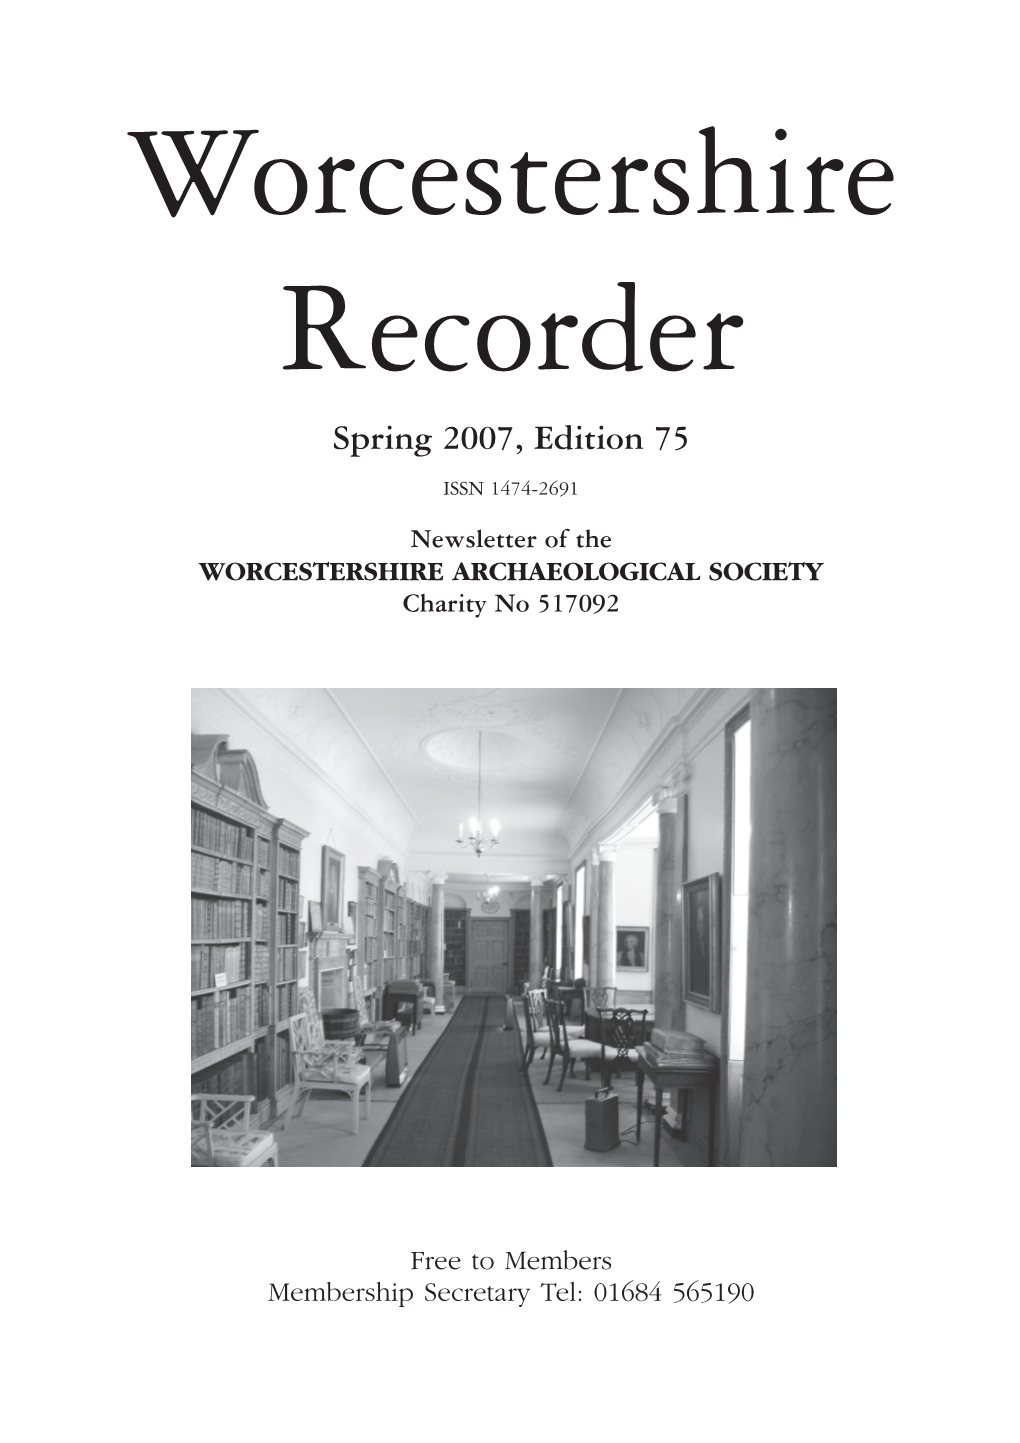 Worcs Recorder Issue 75